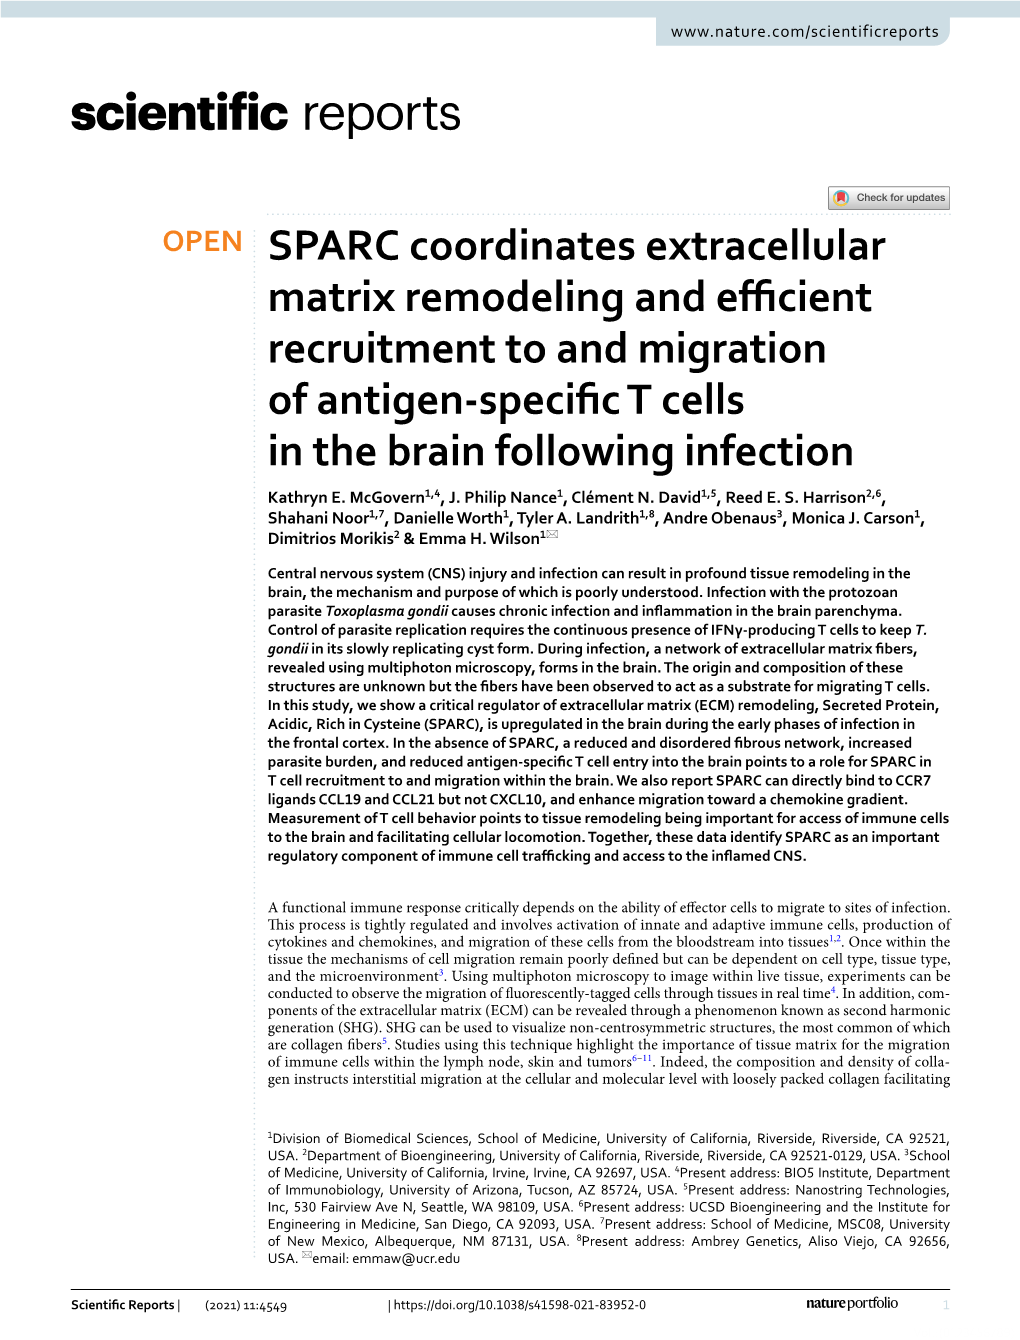 SPARC Coordinates Extracellular Matrix Remodeling and Efficient